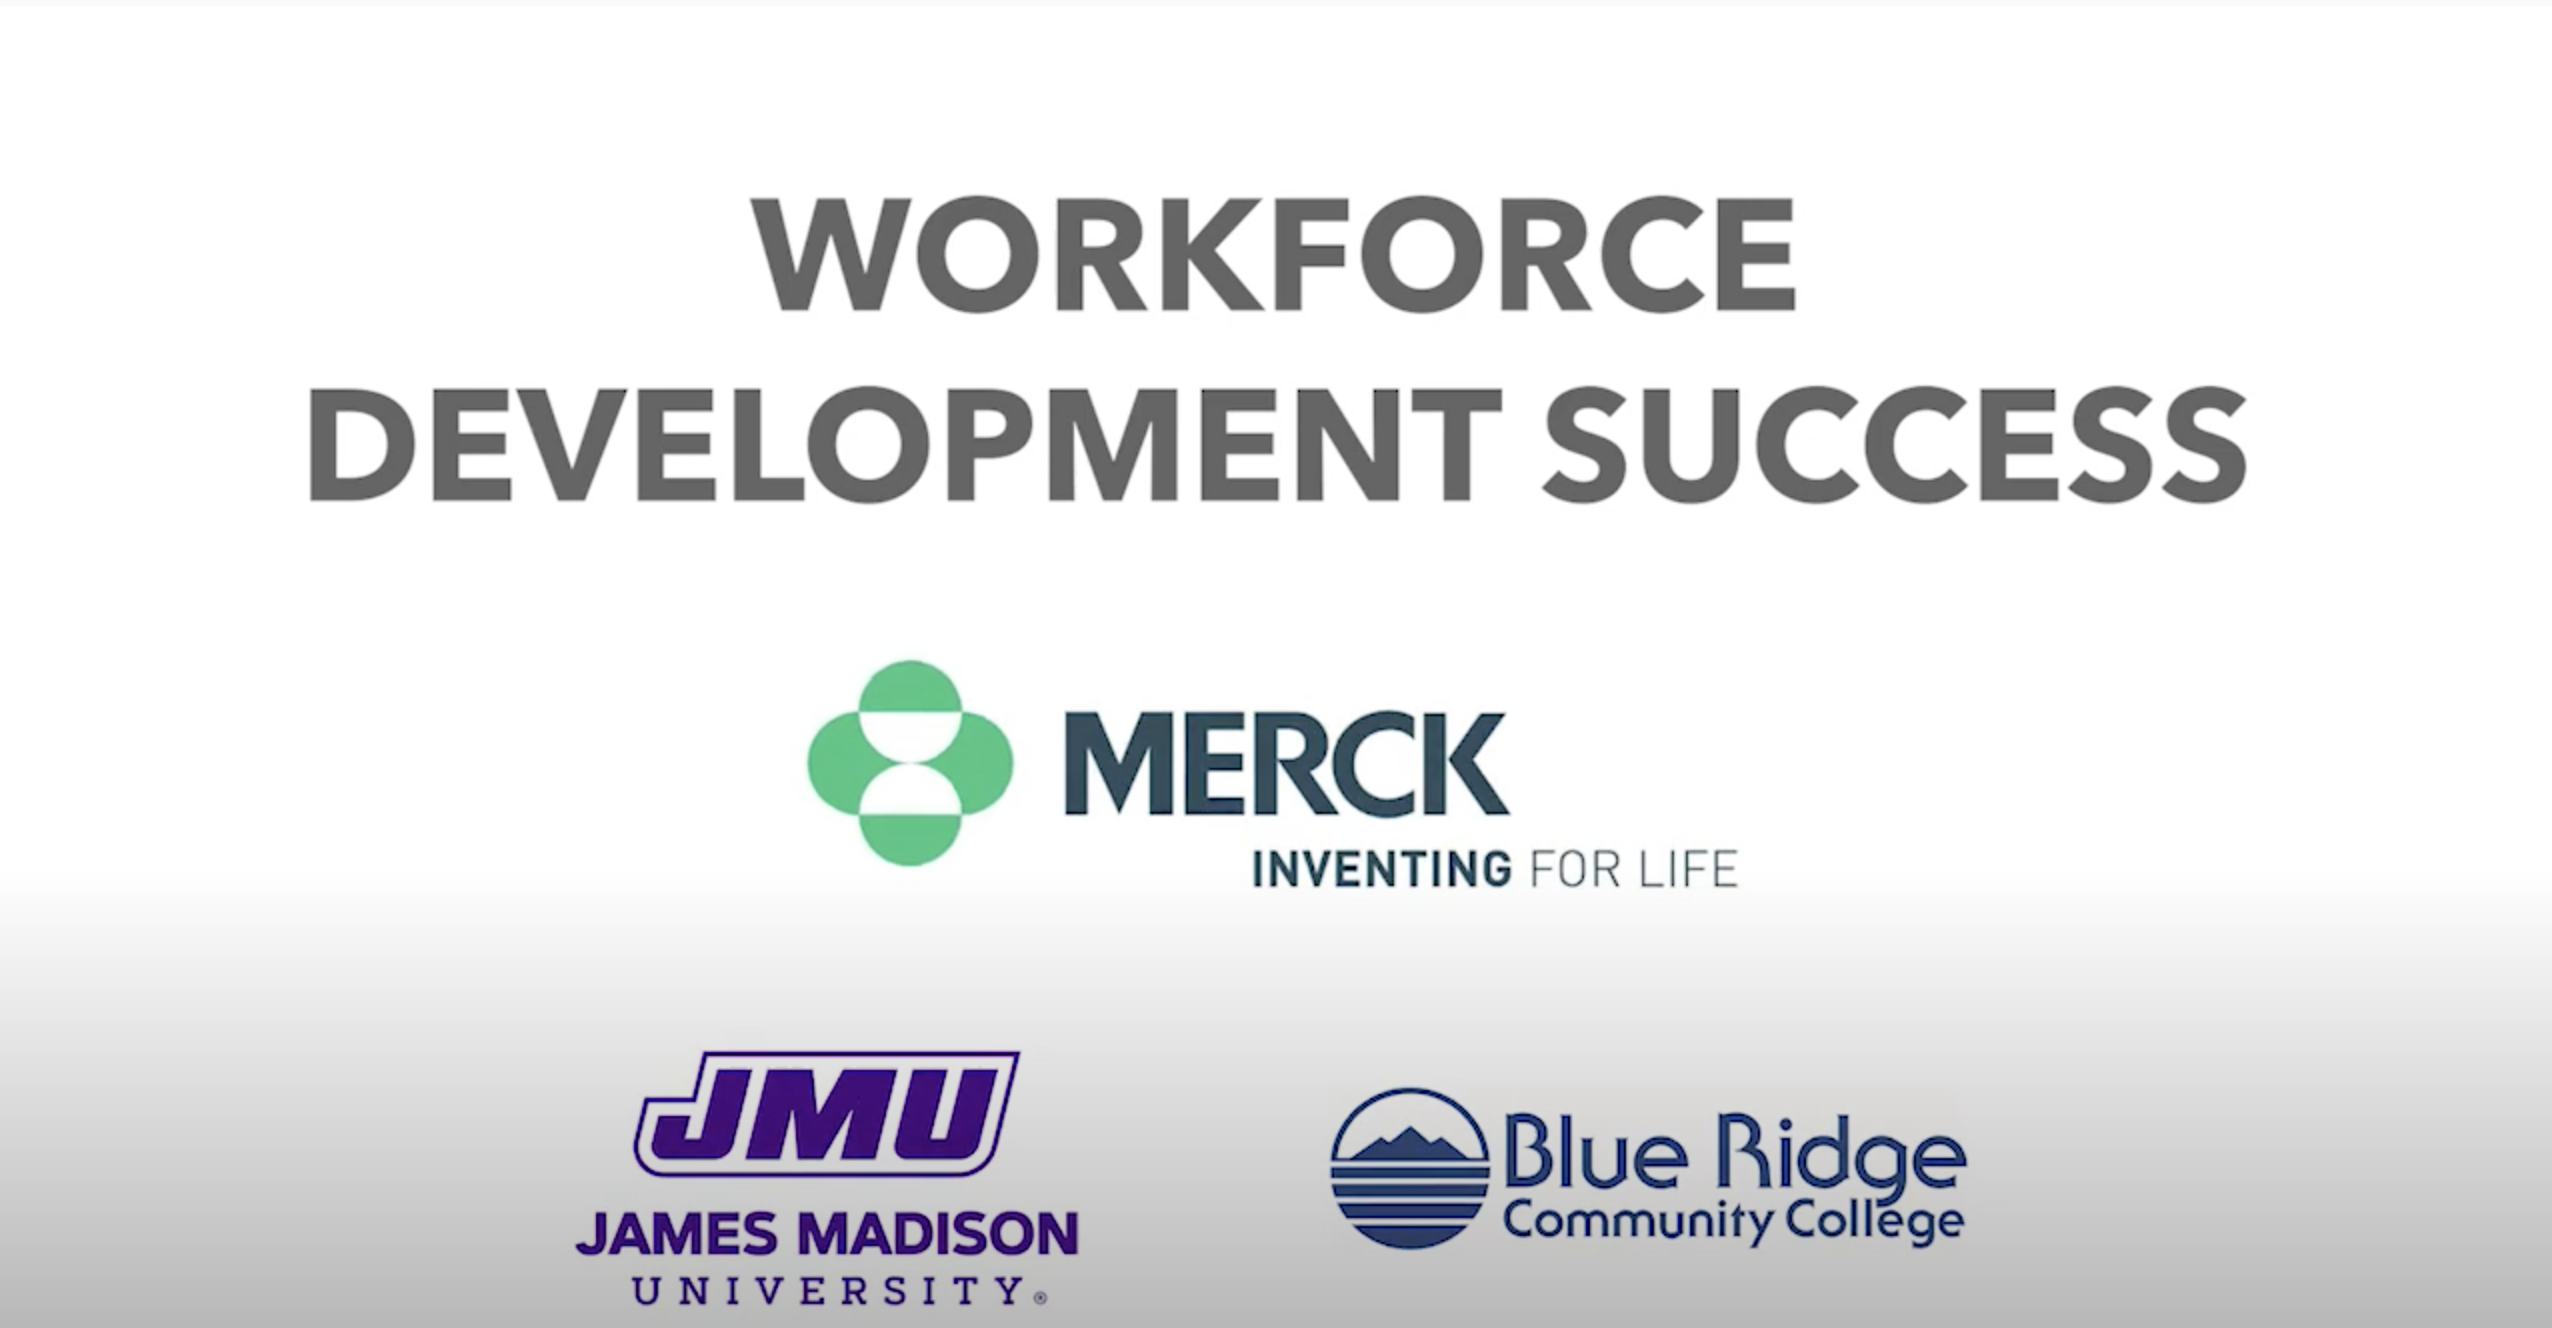 ideo describing workforce development success with Merck